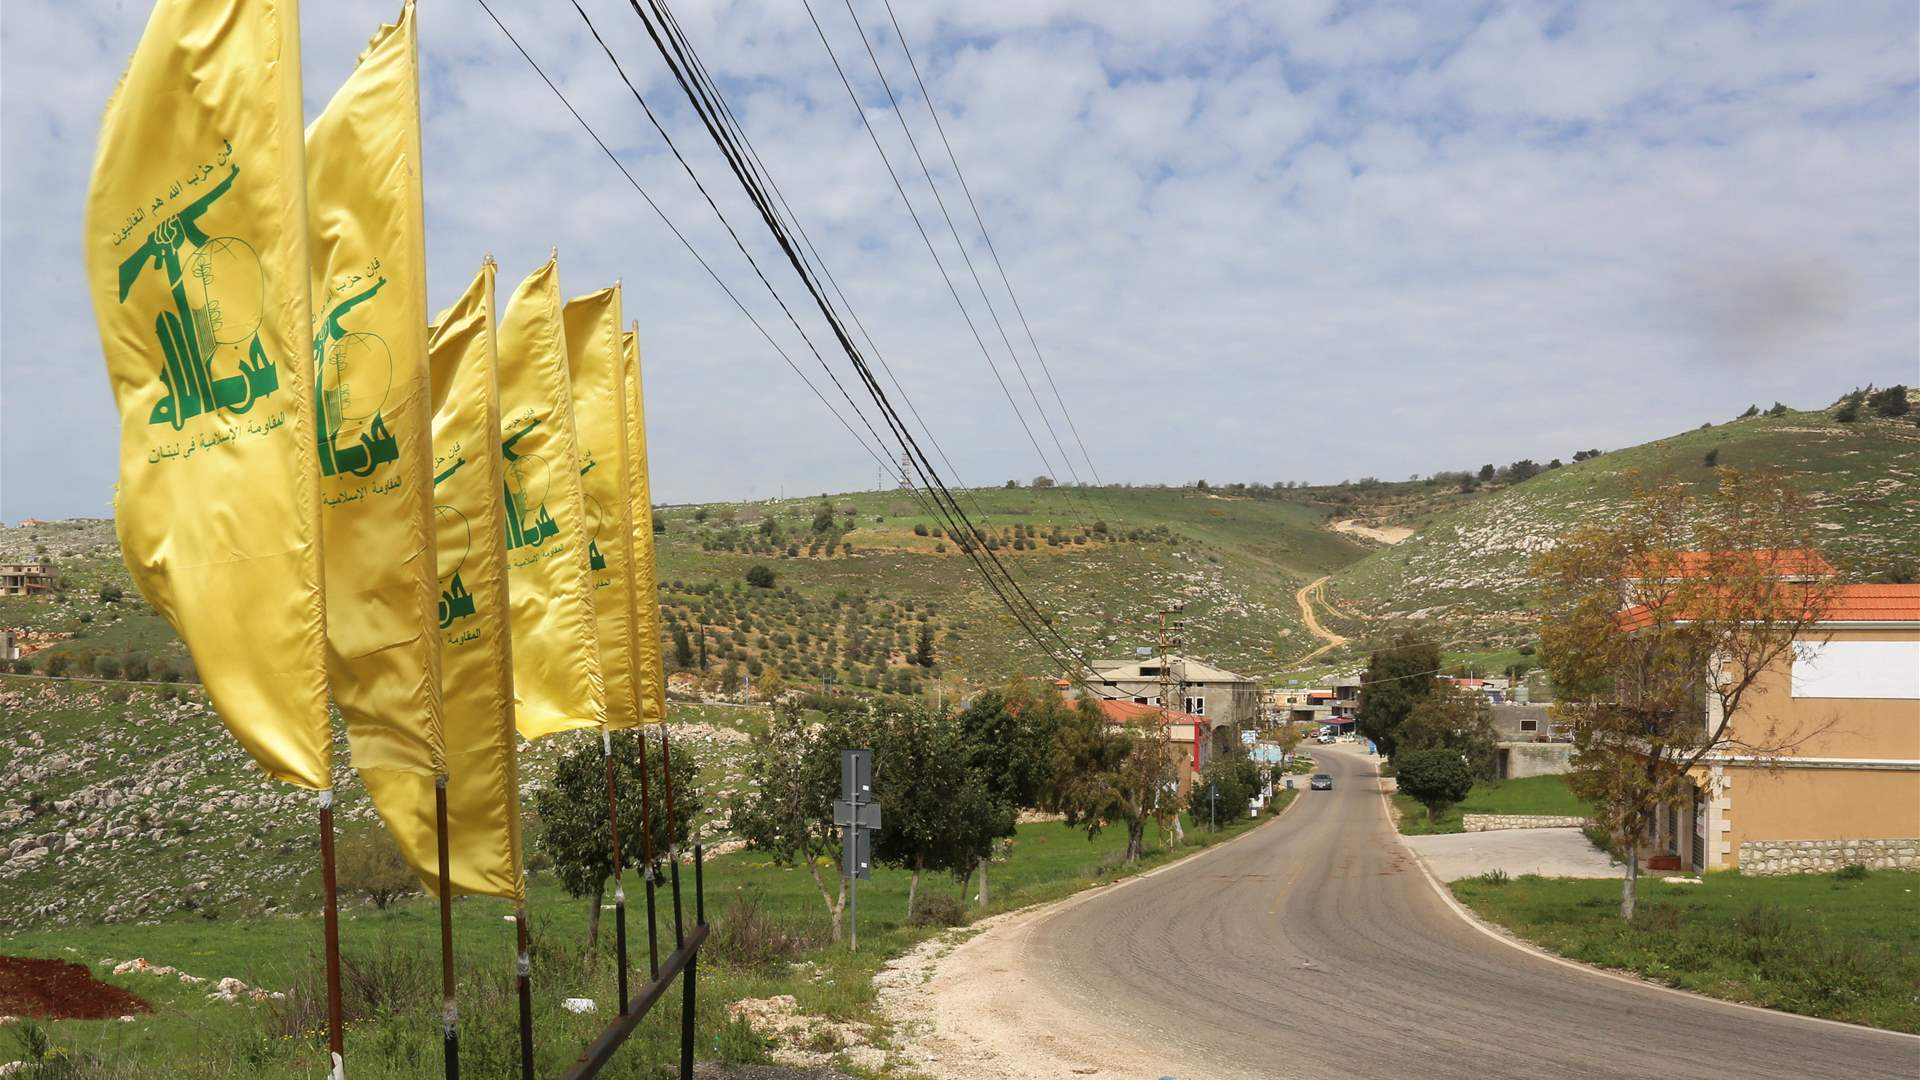 Reuters security sources: Israeli strike on Lebanon kills senior commander in elite Hezbollah unit